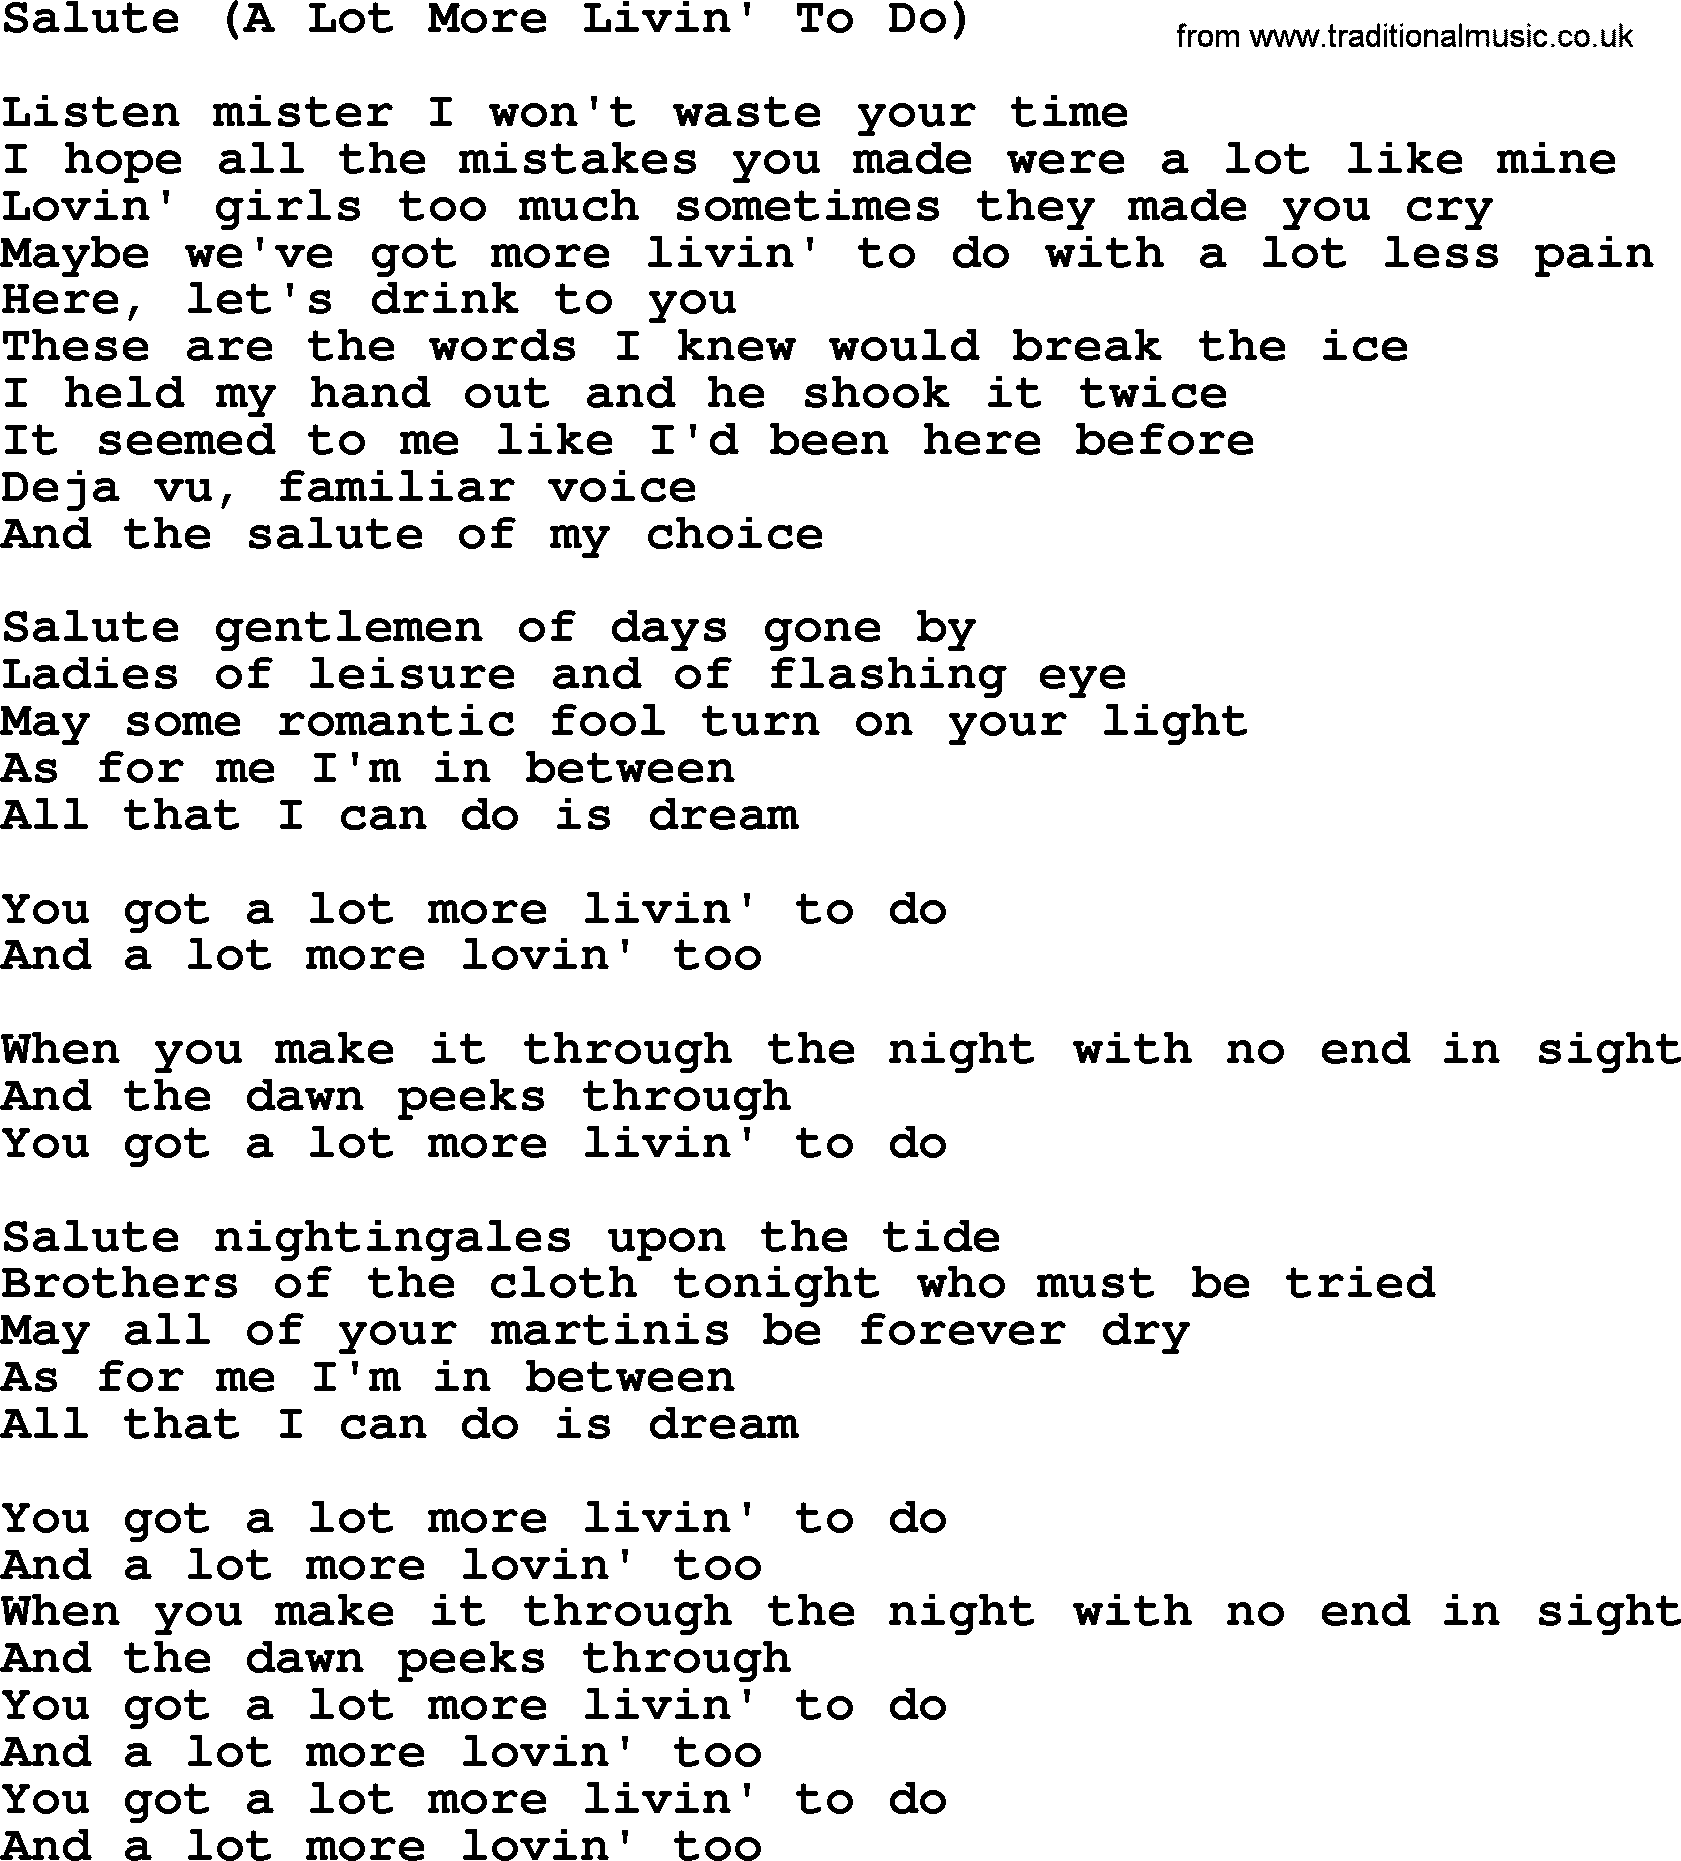 Gordon Lightfoot song Salute (A Lot More Livin' To Do), lyrics